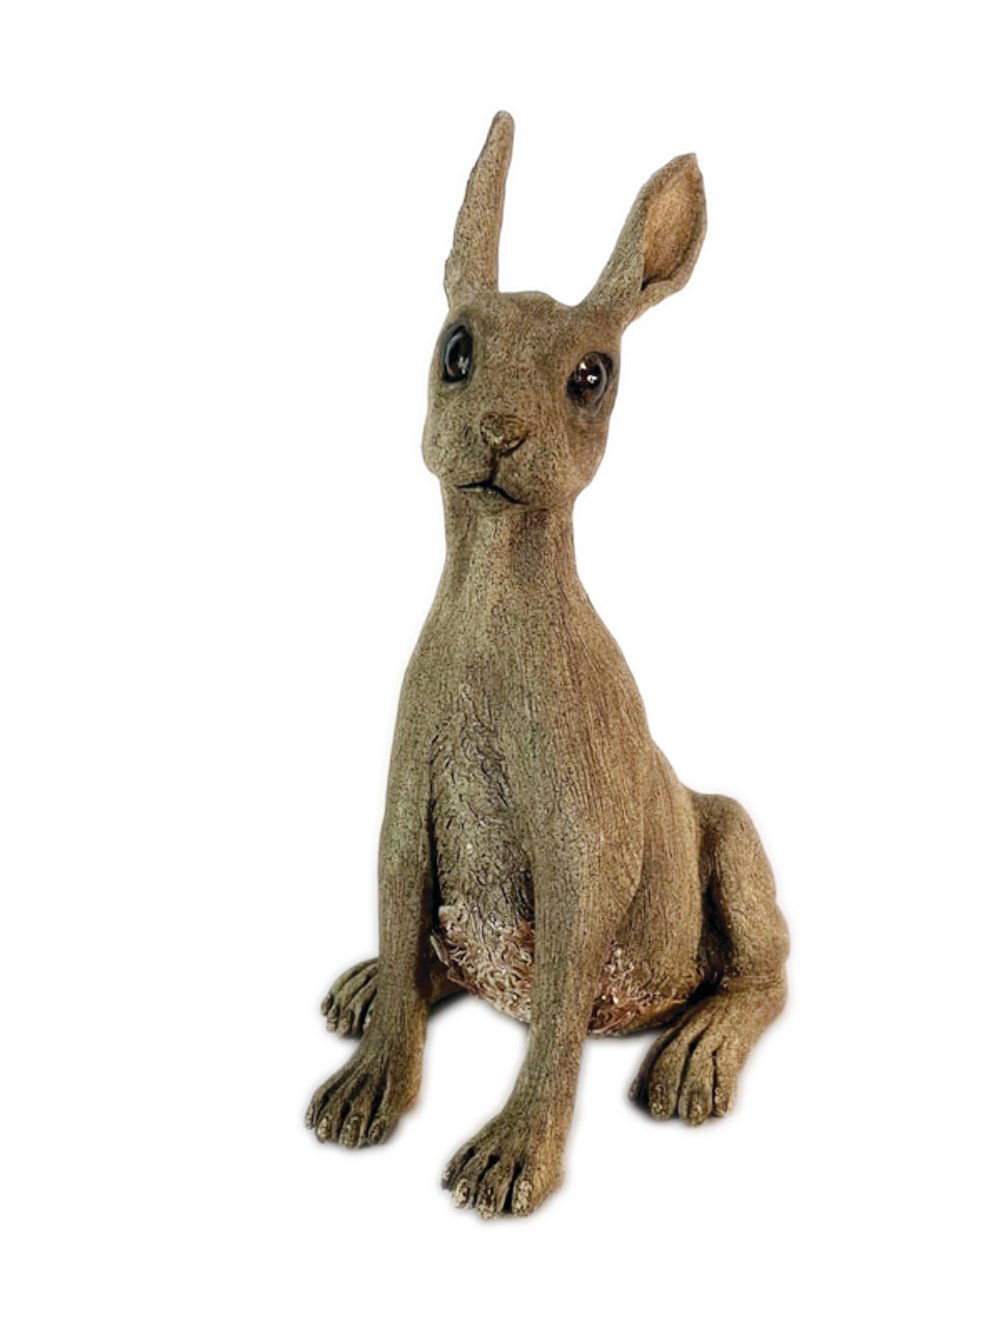 Mr. Hare by 
Susan Kelley Scotti